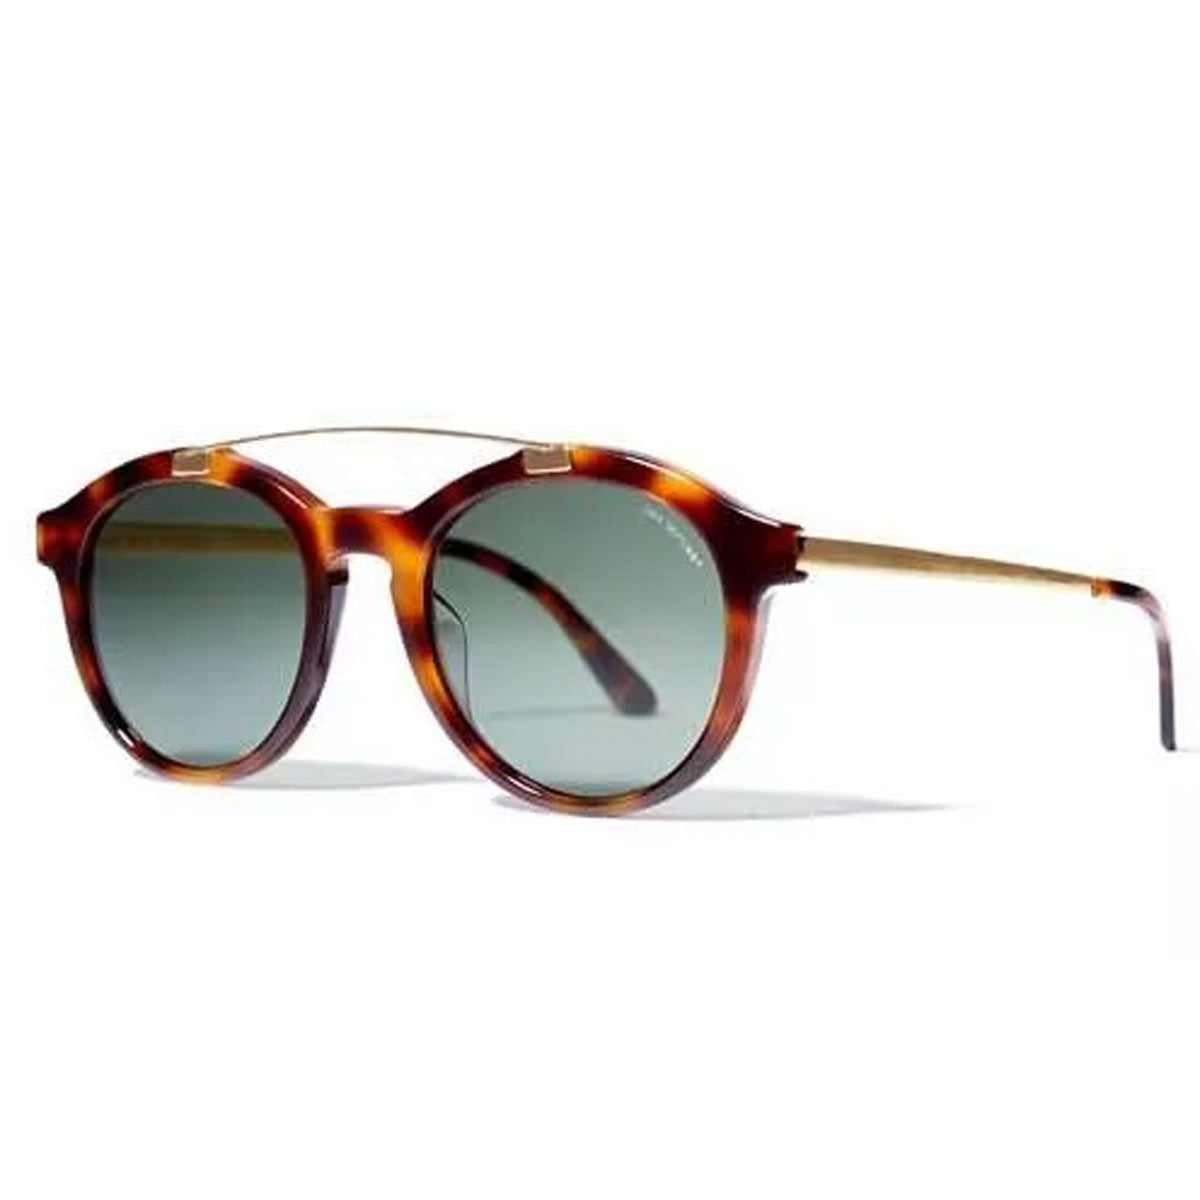 Bob Sdrunk Women's Sunglasses - Matias Tortoise/Gold Frame / MATIAS-02G-45-25-145